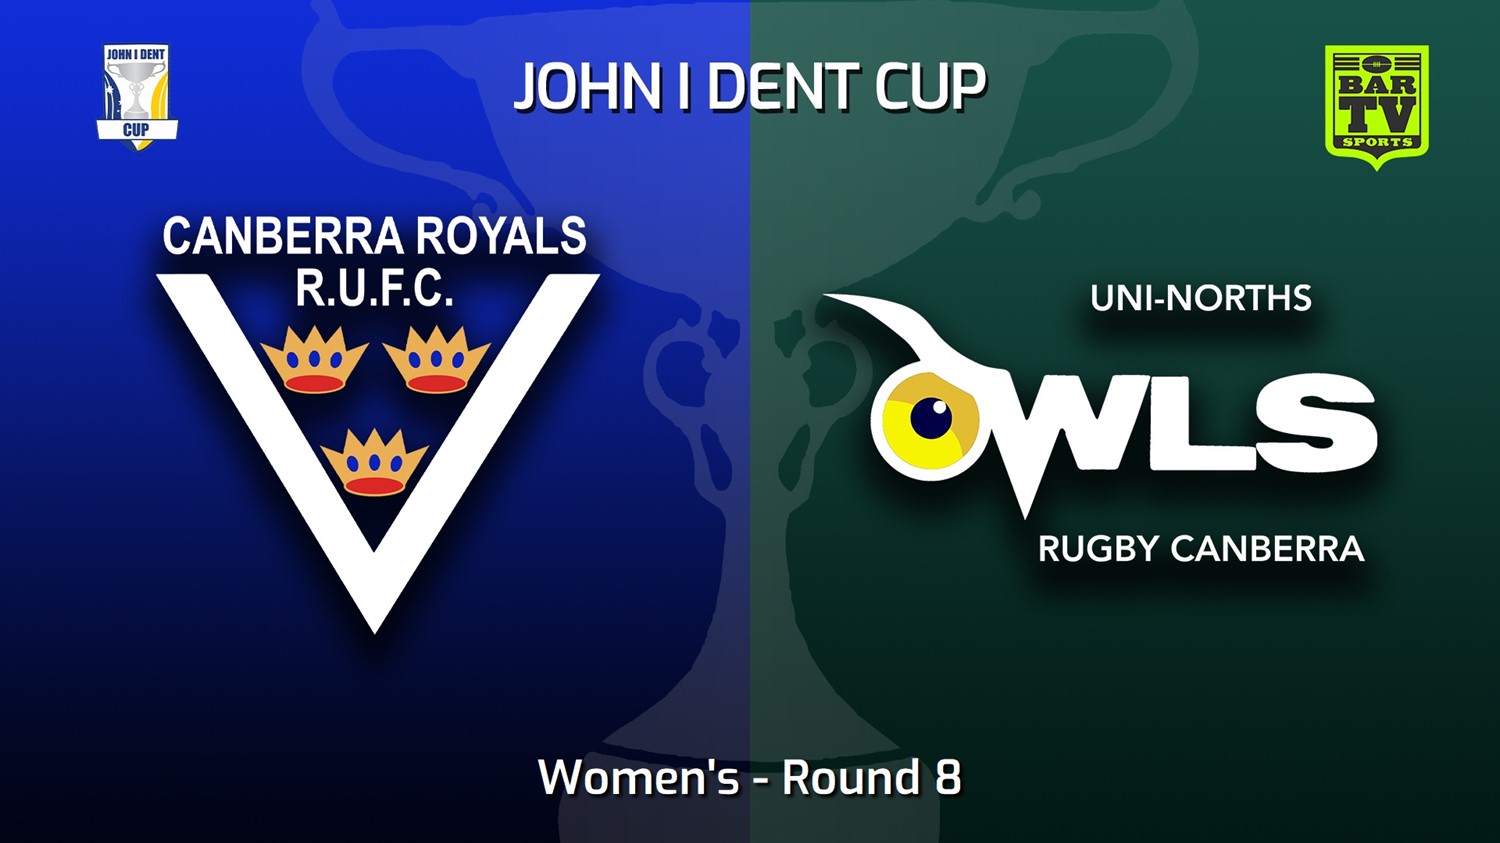 220618-John I Dent (ACT) Round 8 - Women's - Canberra Royals v UNI-Norths Slate Image